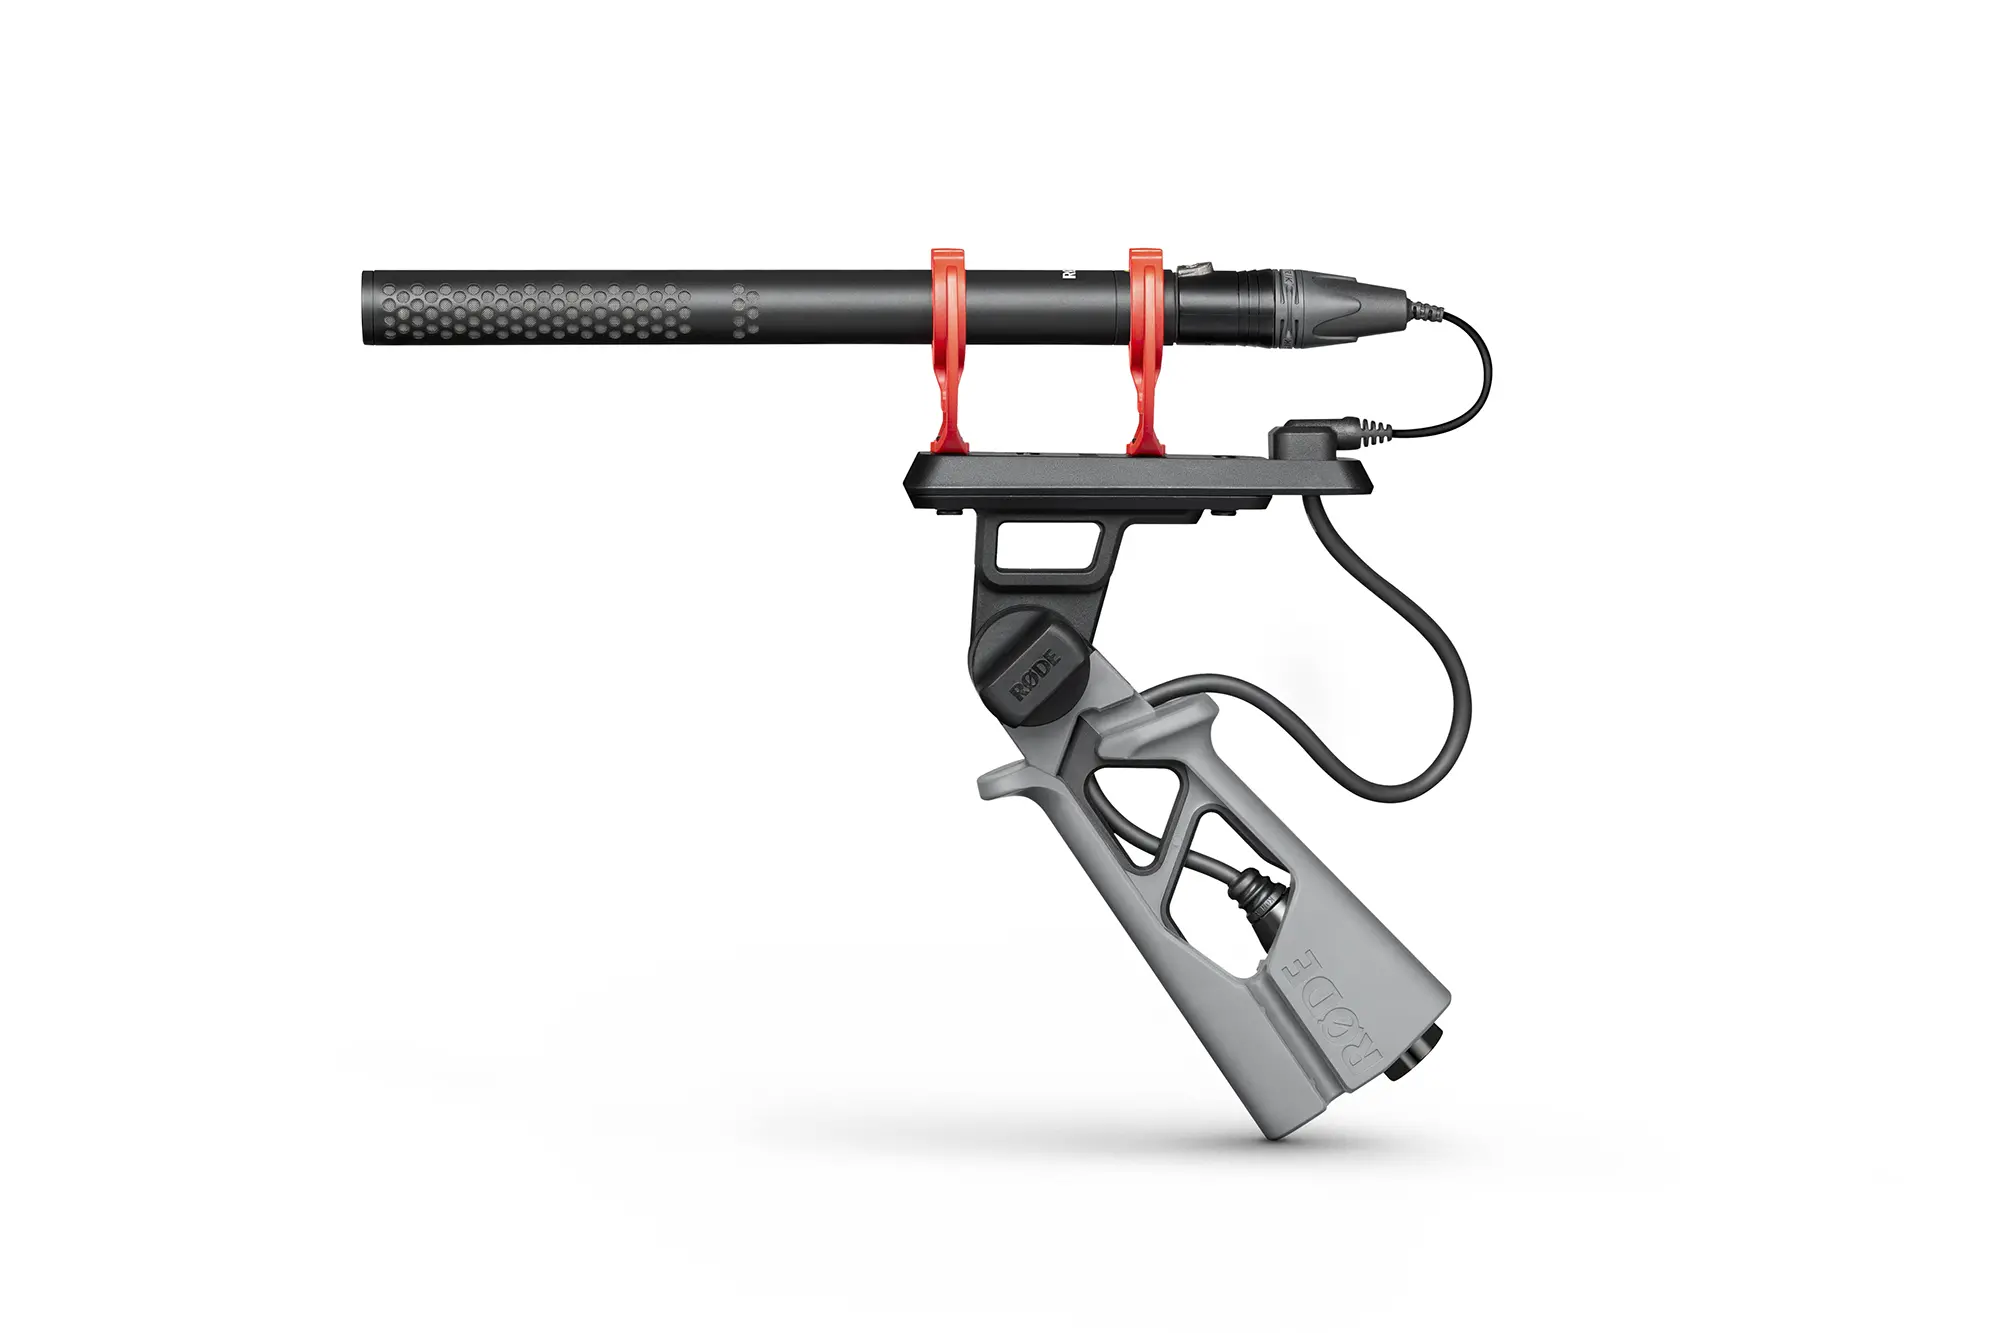 RØDE NTG5 short shotgun mic: 5 ways it dethrones the MKH-416 16